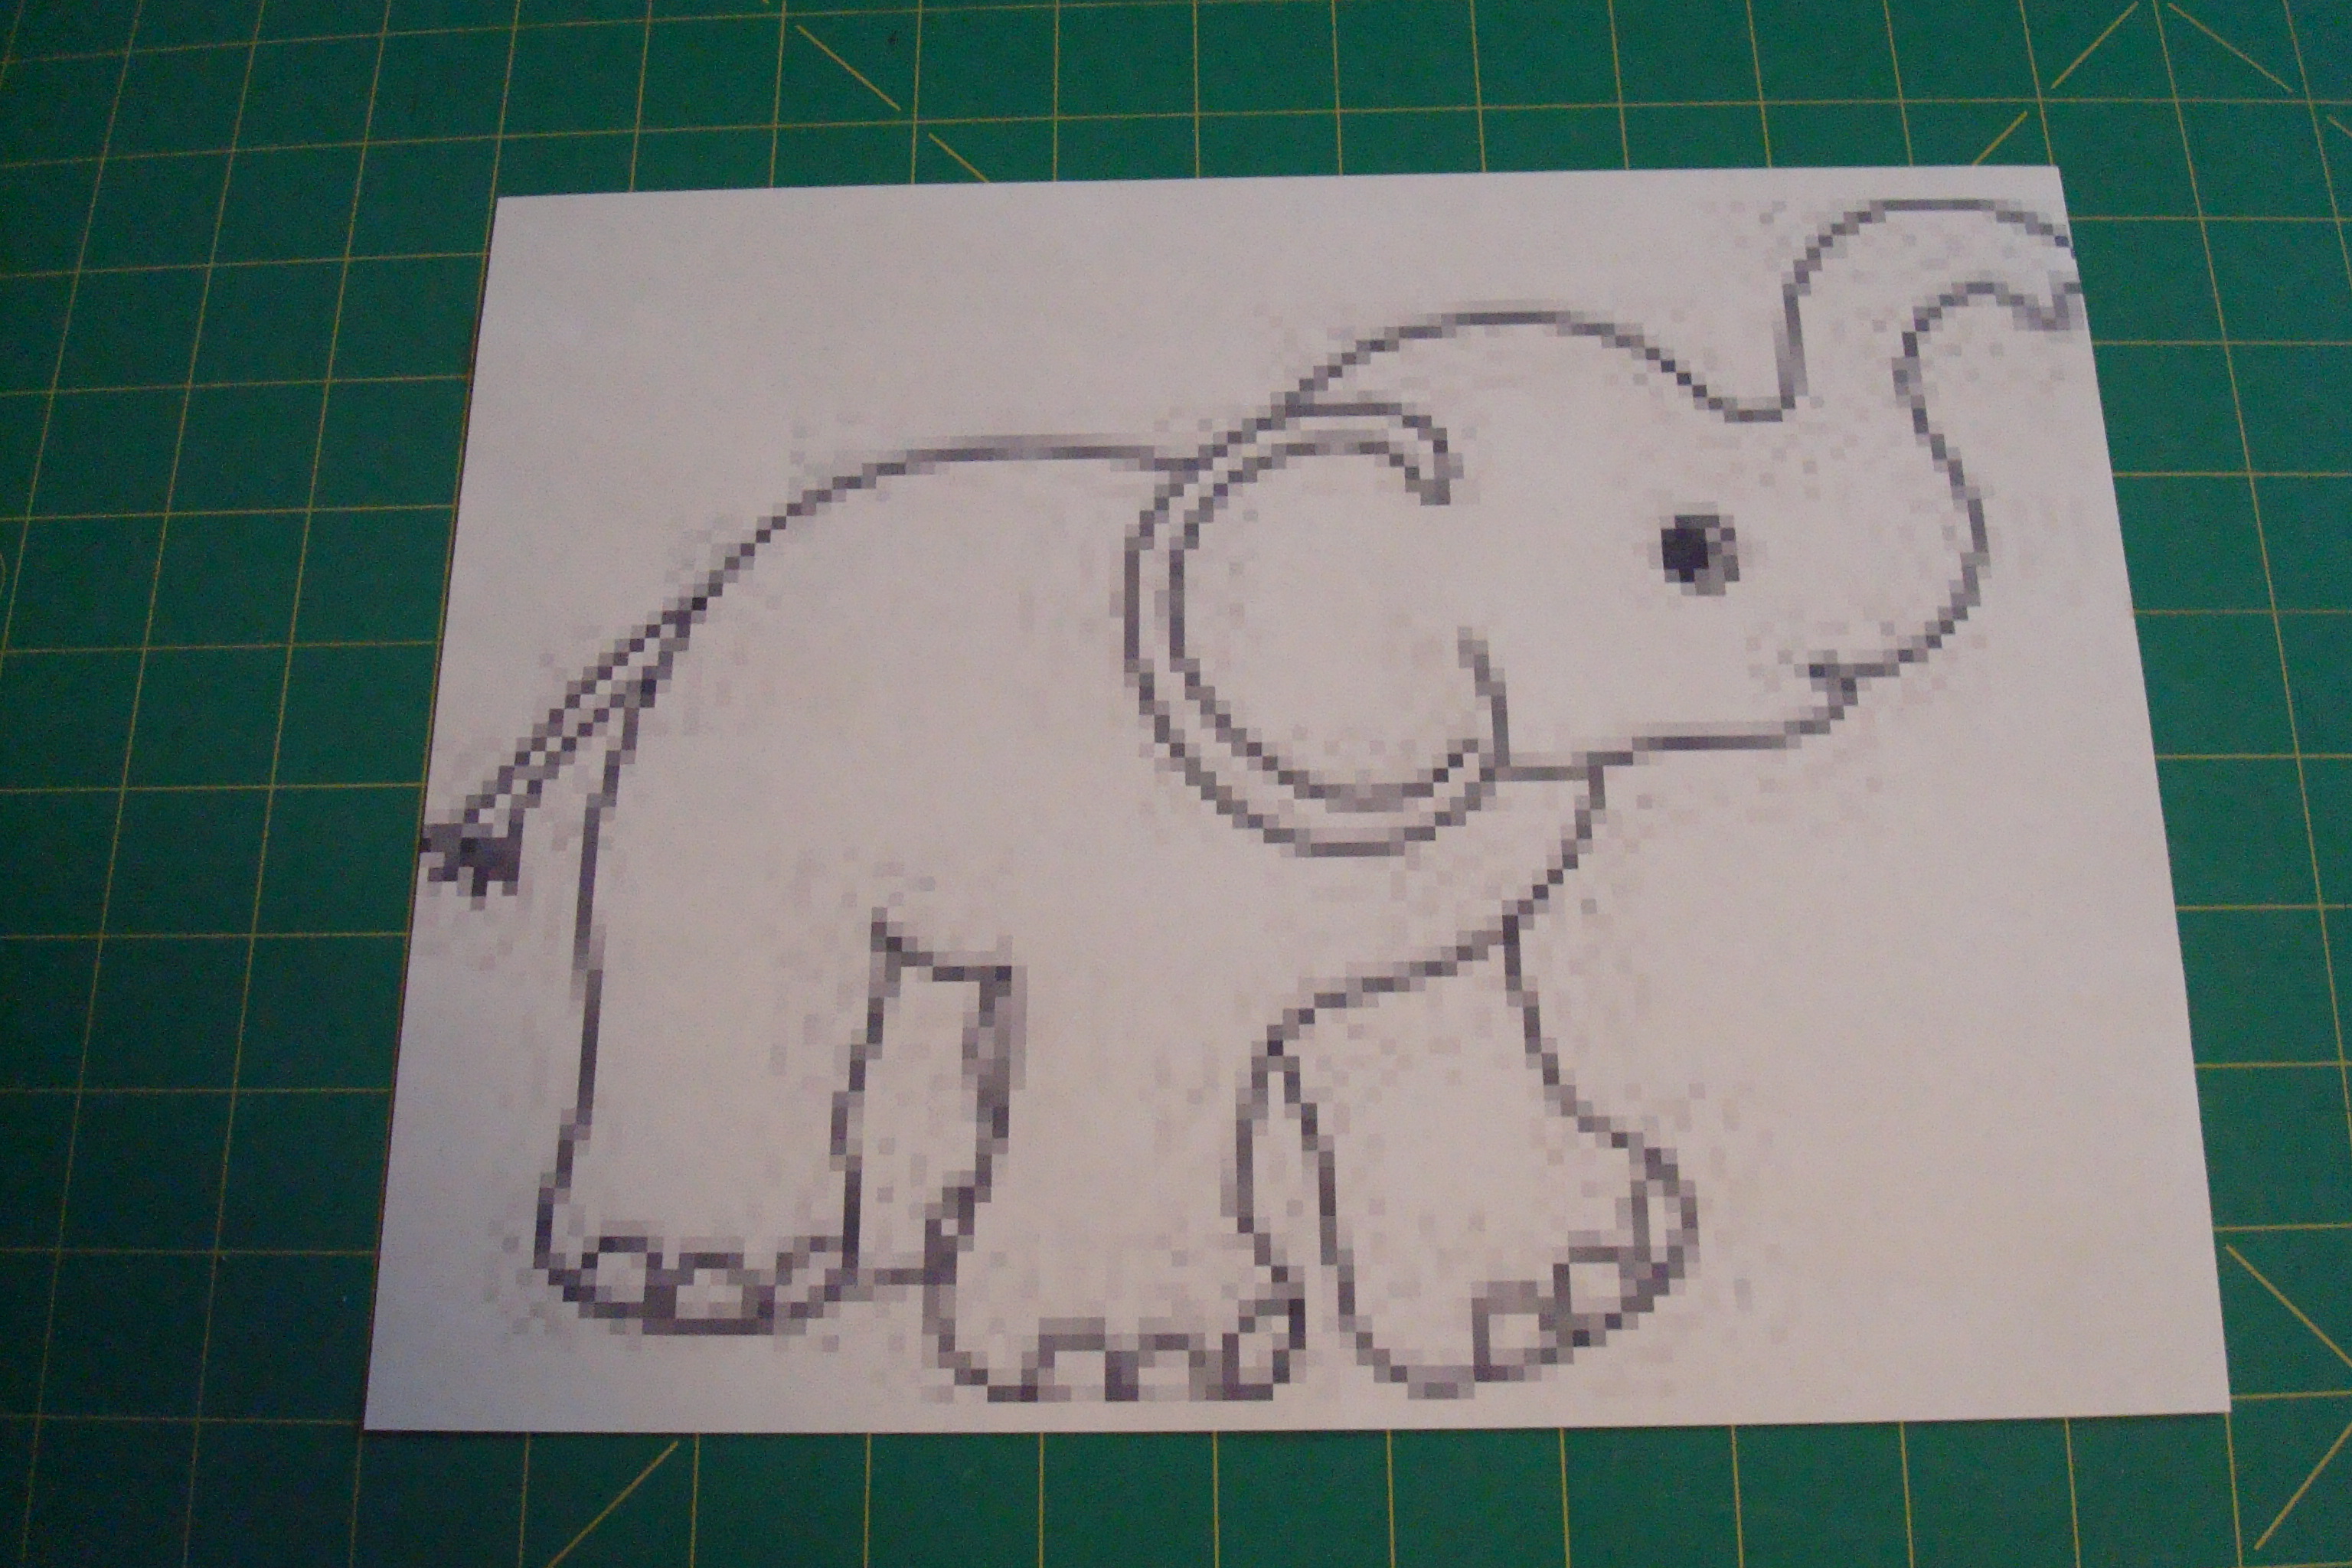 Elephant template